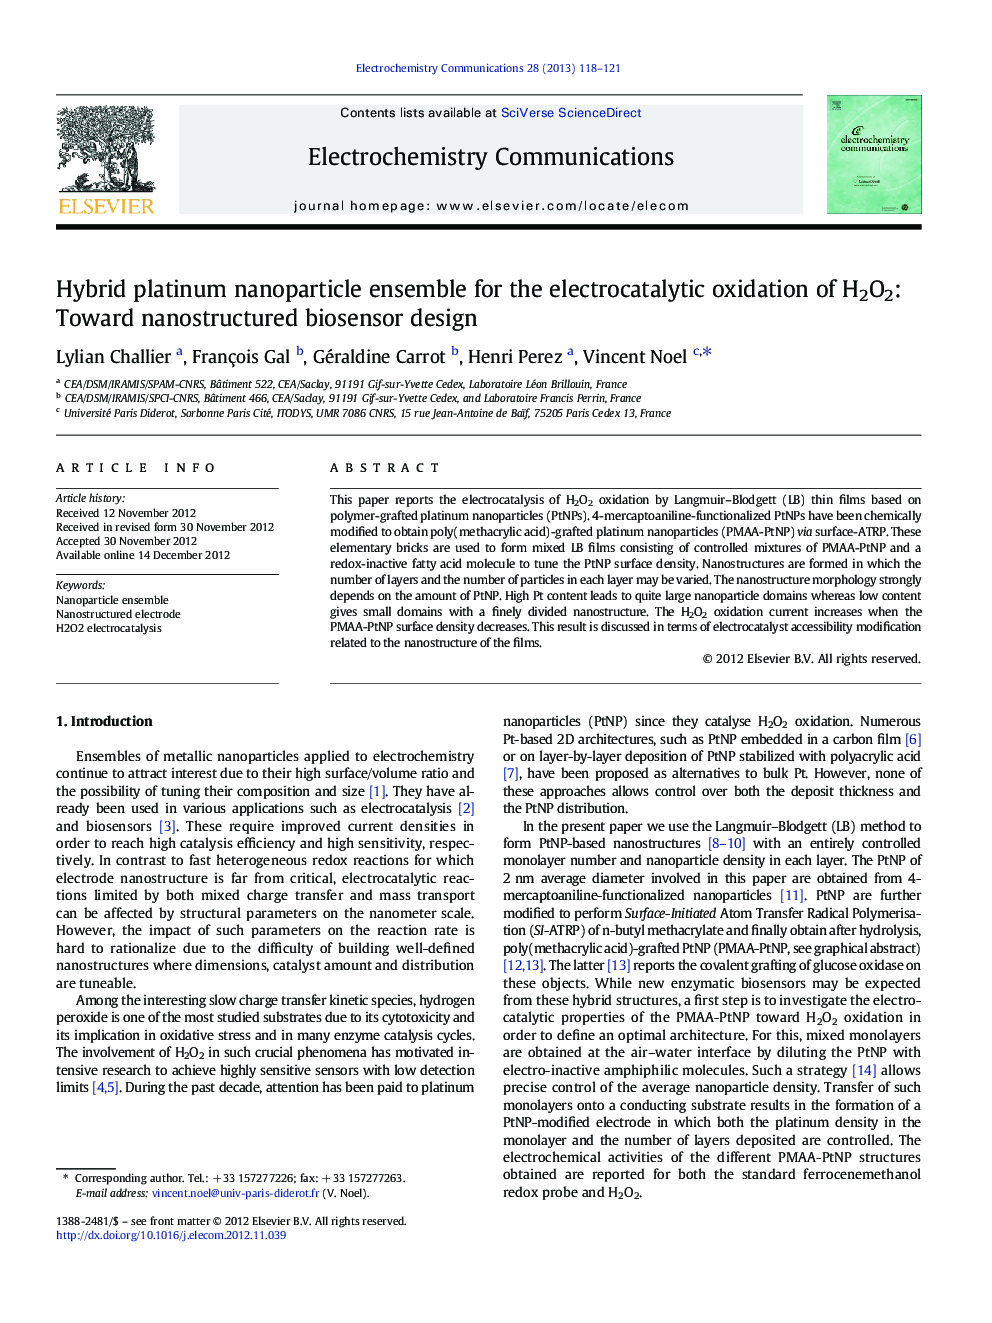 Hybrid platinum nanoparticle ensemble for the electrocatalytic oxidation of H2O2: Toward nanostructured biosensor design